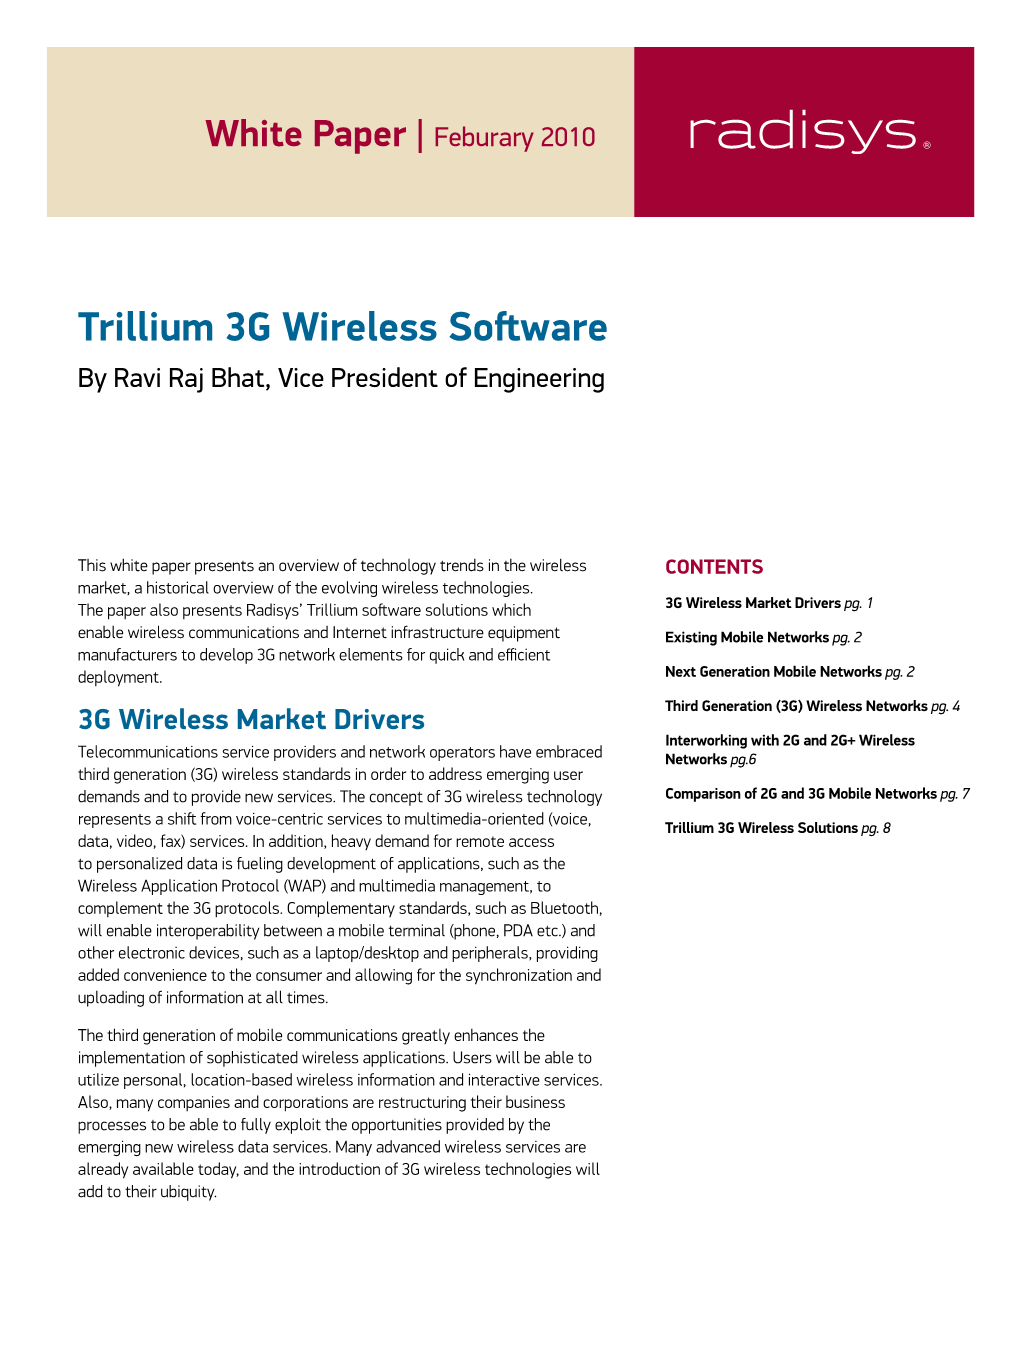 Trillium 3G Wireless Software White Paper | Radisys